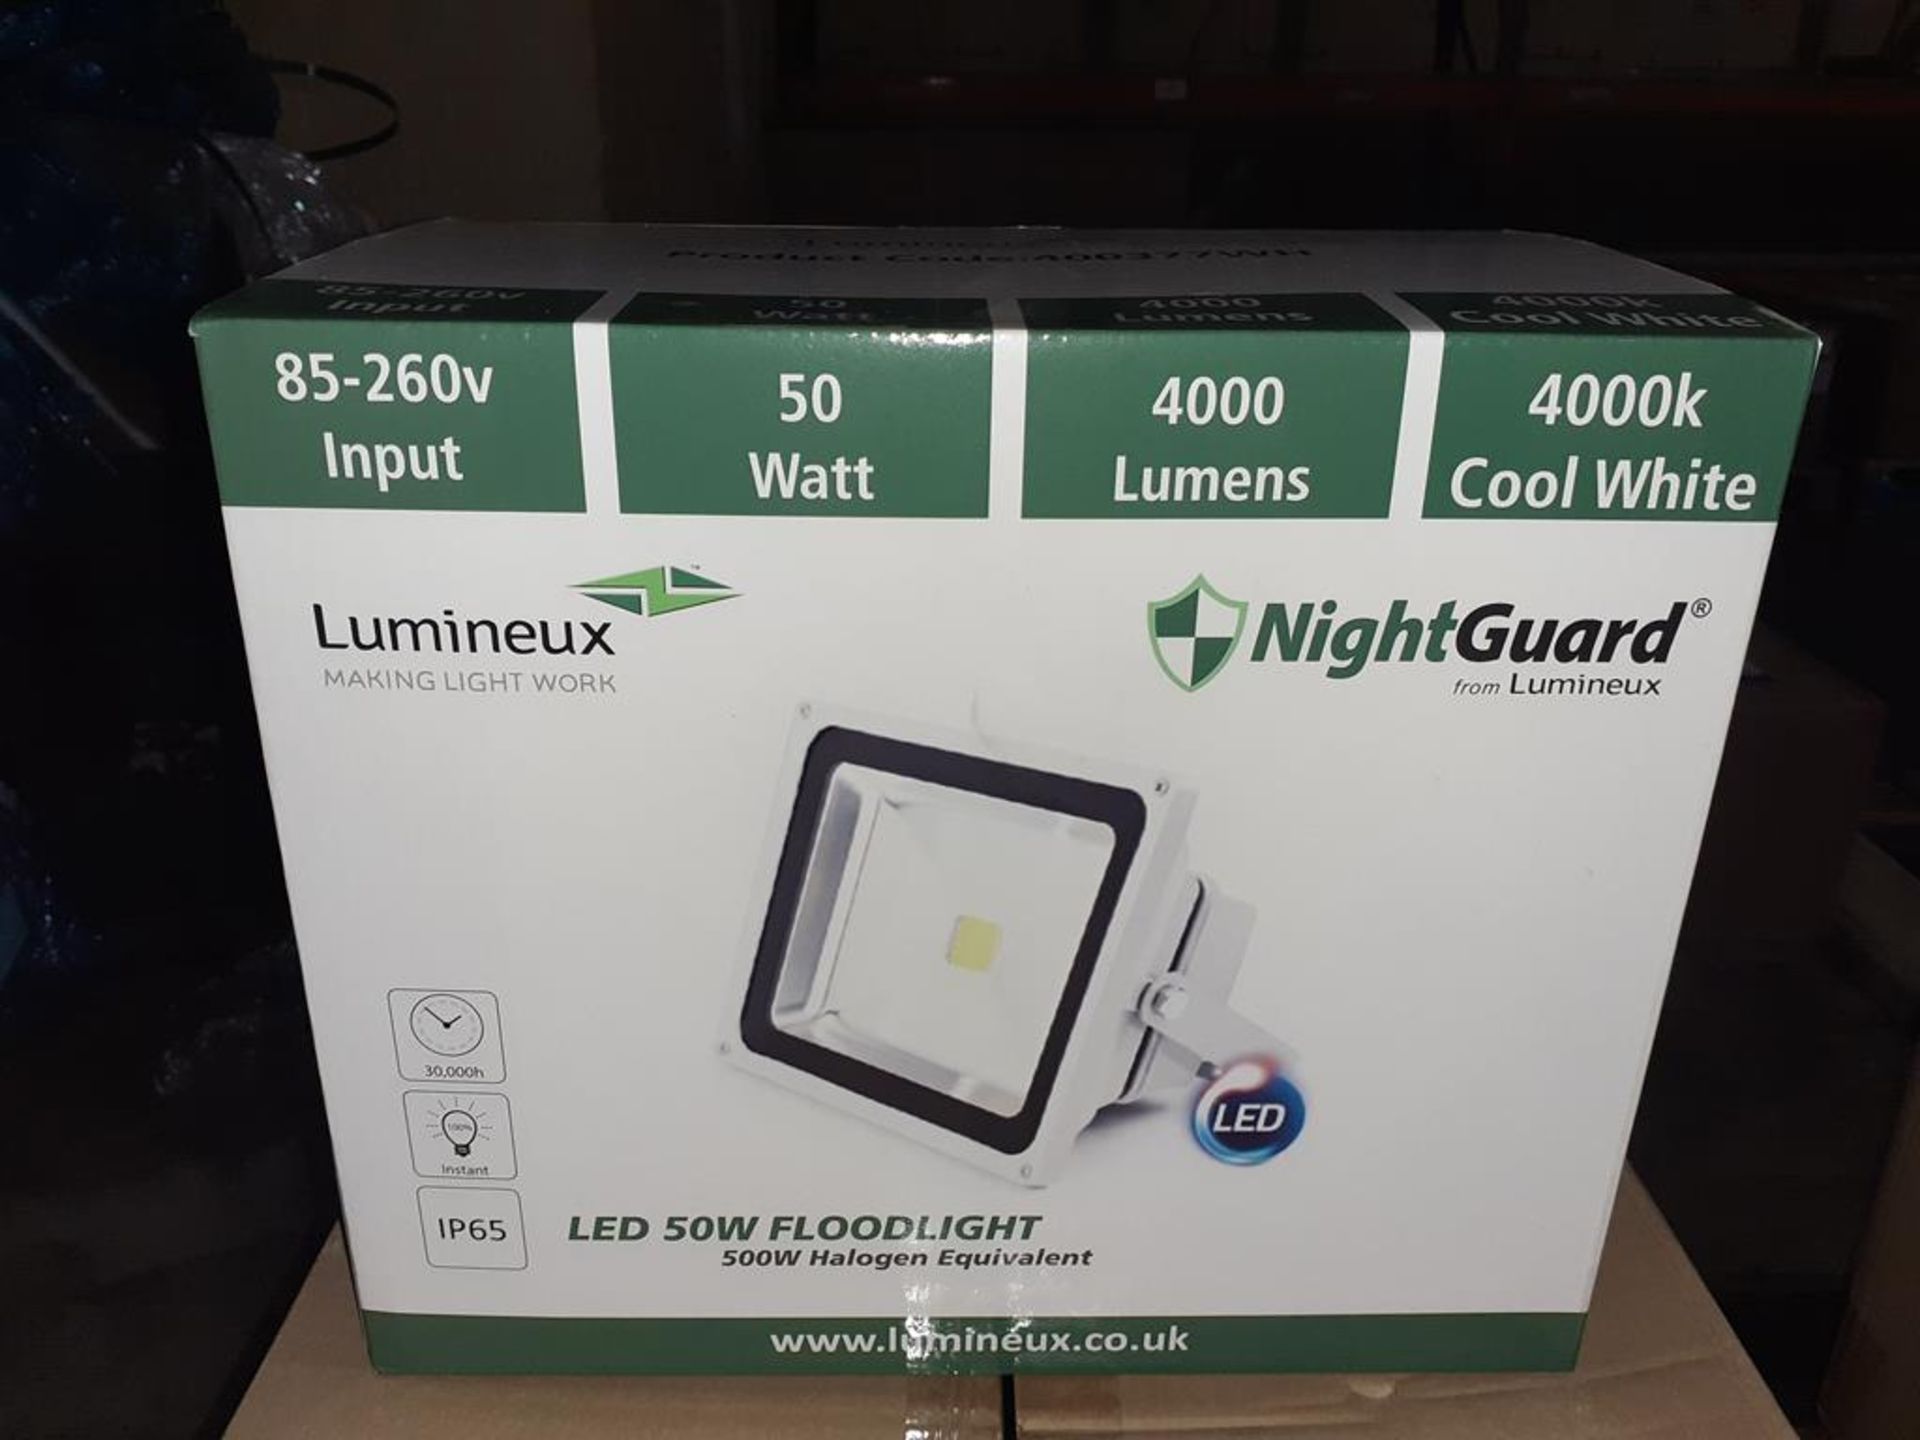 8 x LED 50W Floodlight 4000K 85-265V Input 4000 Lumens OEM Trade Price £ 415 - Image 3 of 3